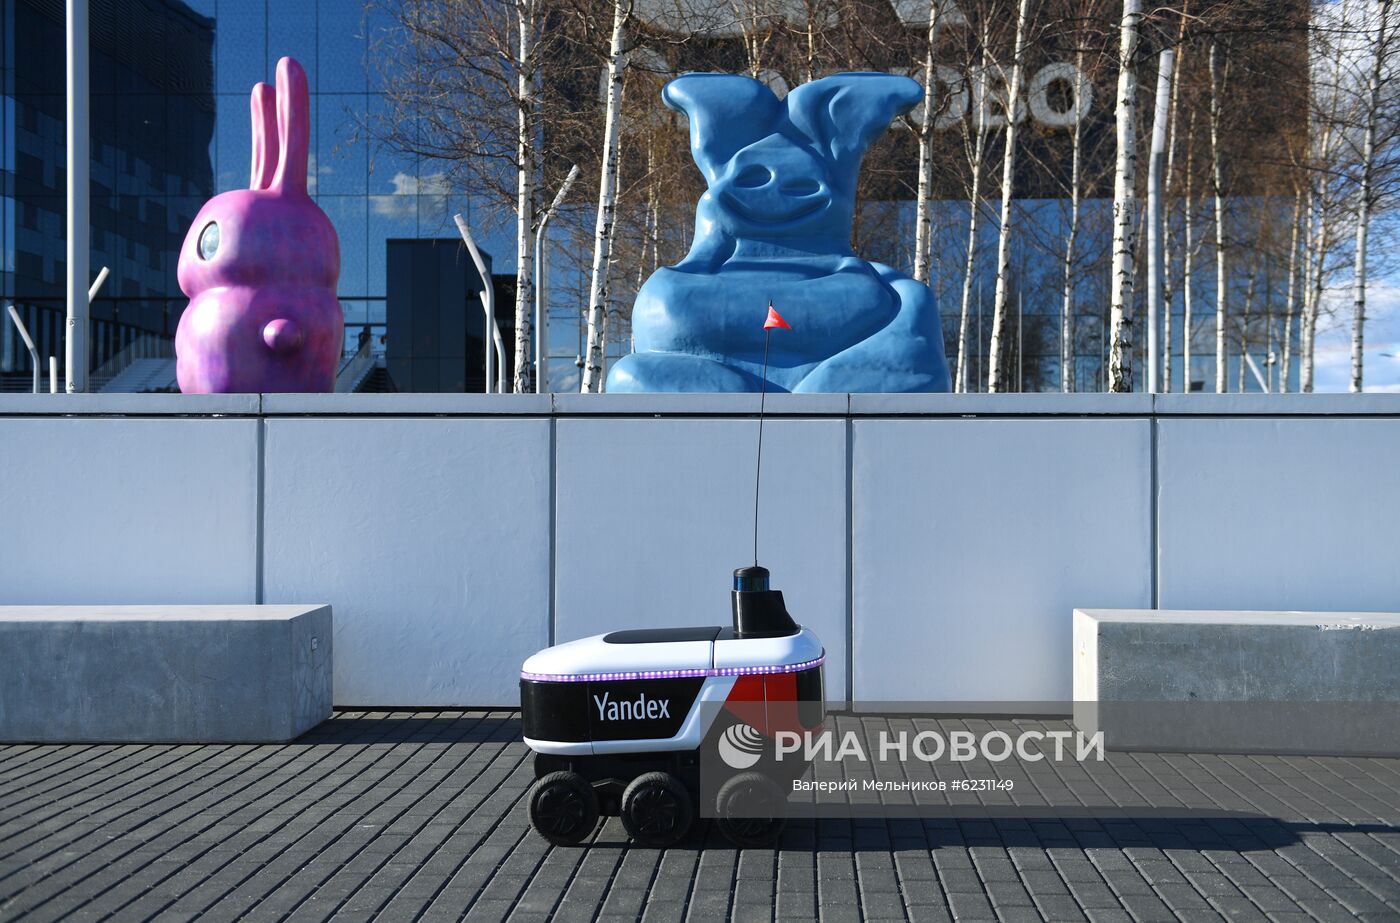 Робот-курьер "Яндекса" начал работать на территории "Сколково"